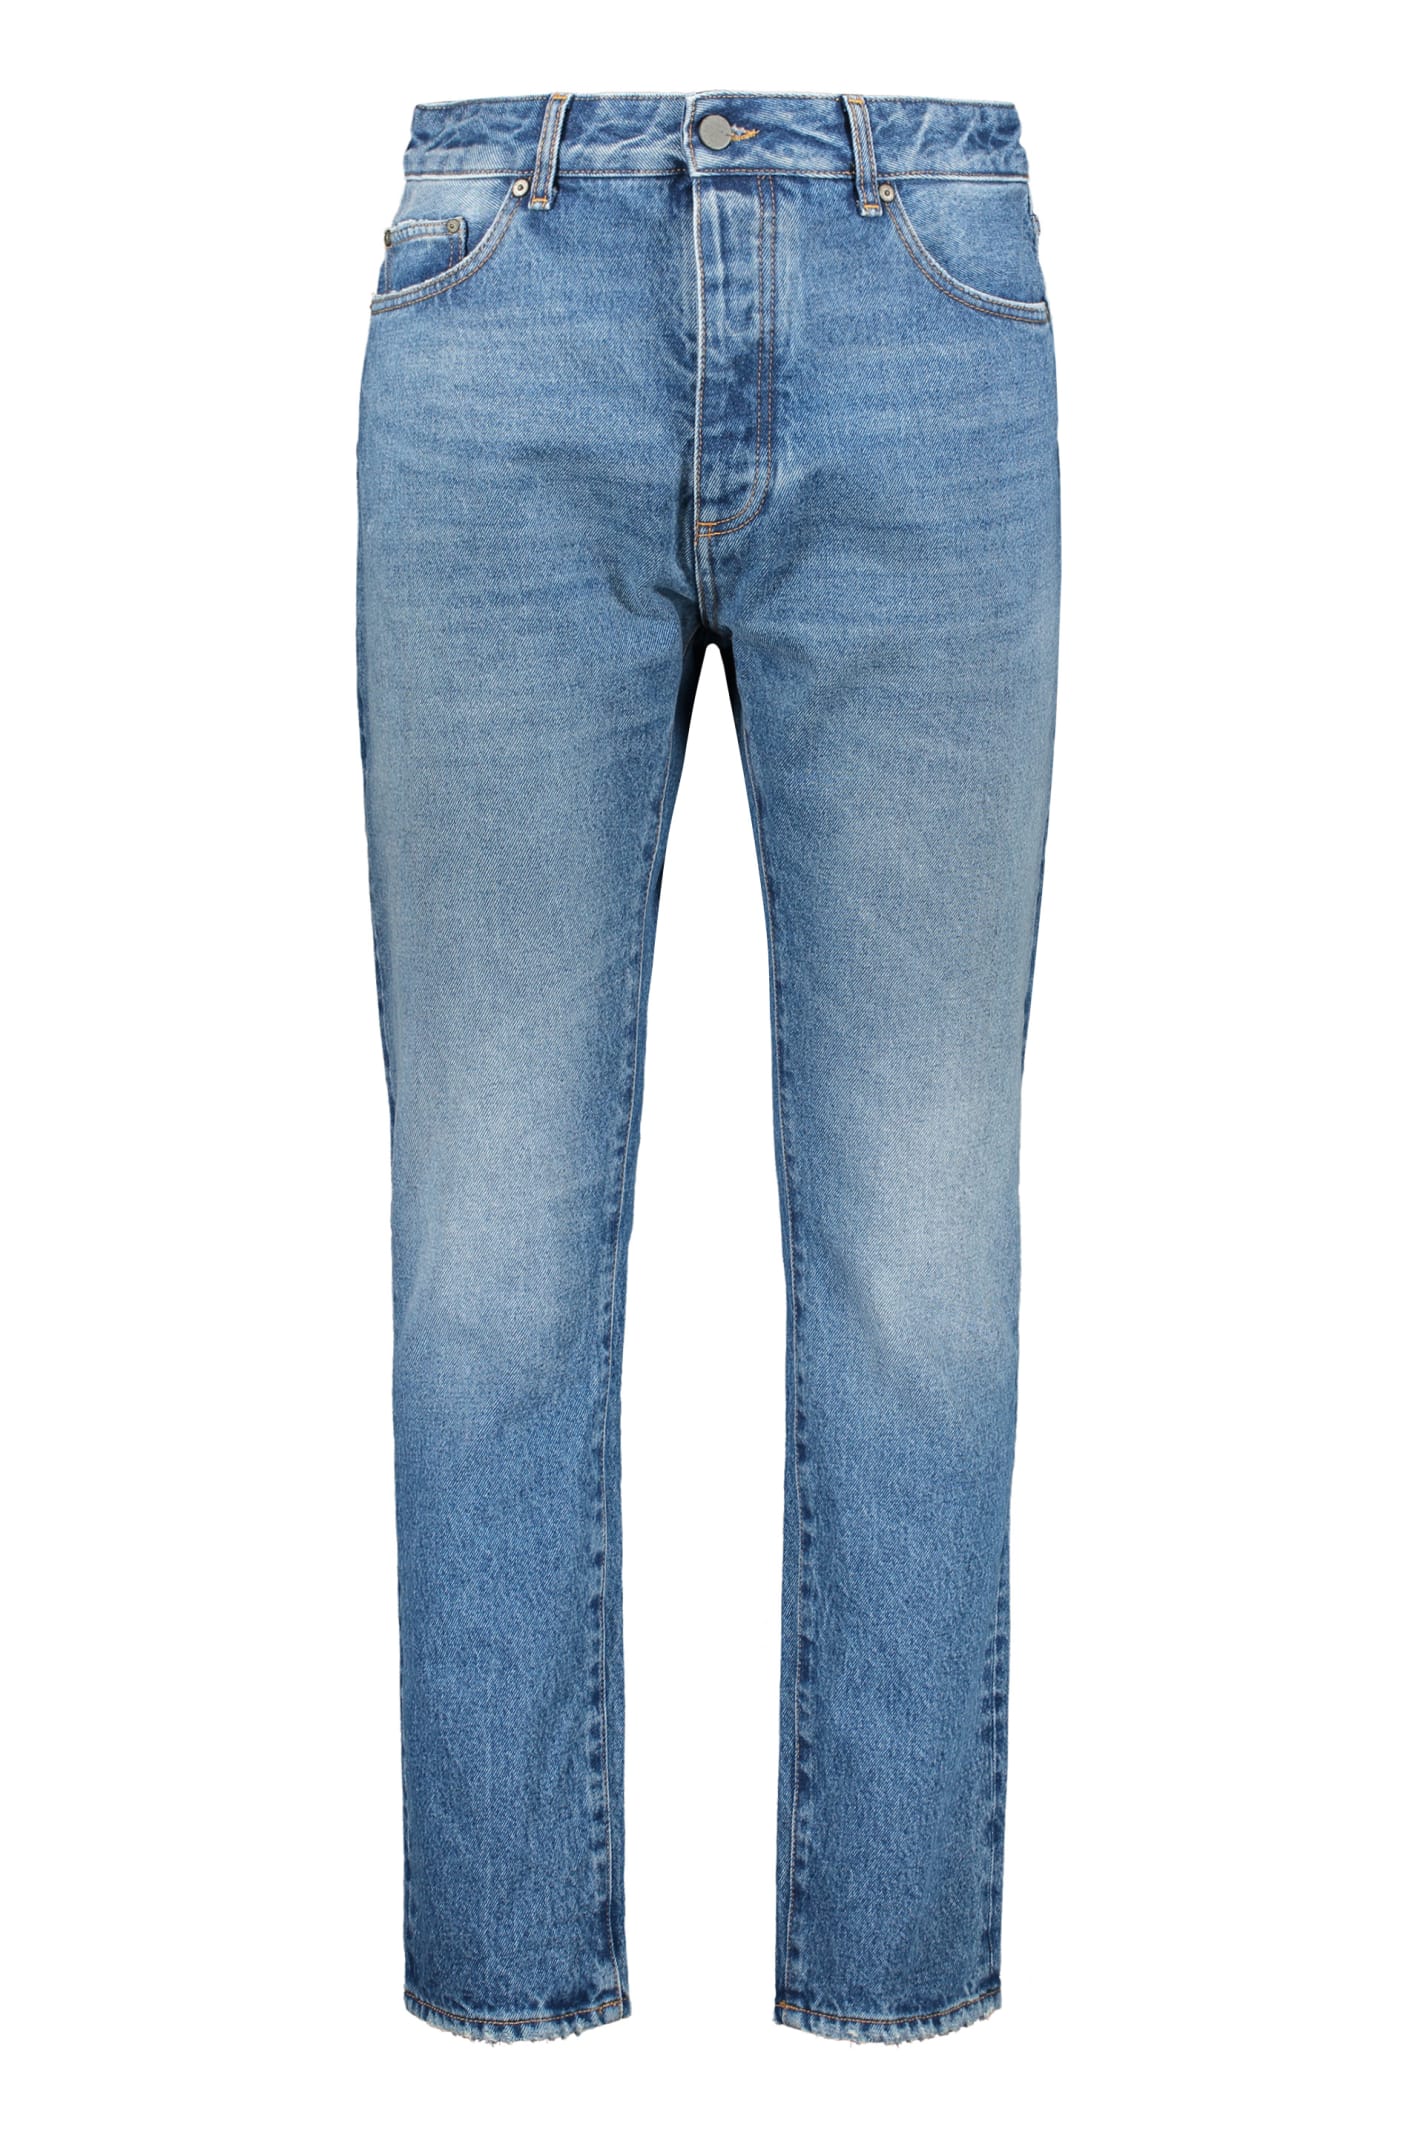 Palm Angels 5-pocket Jeans